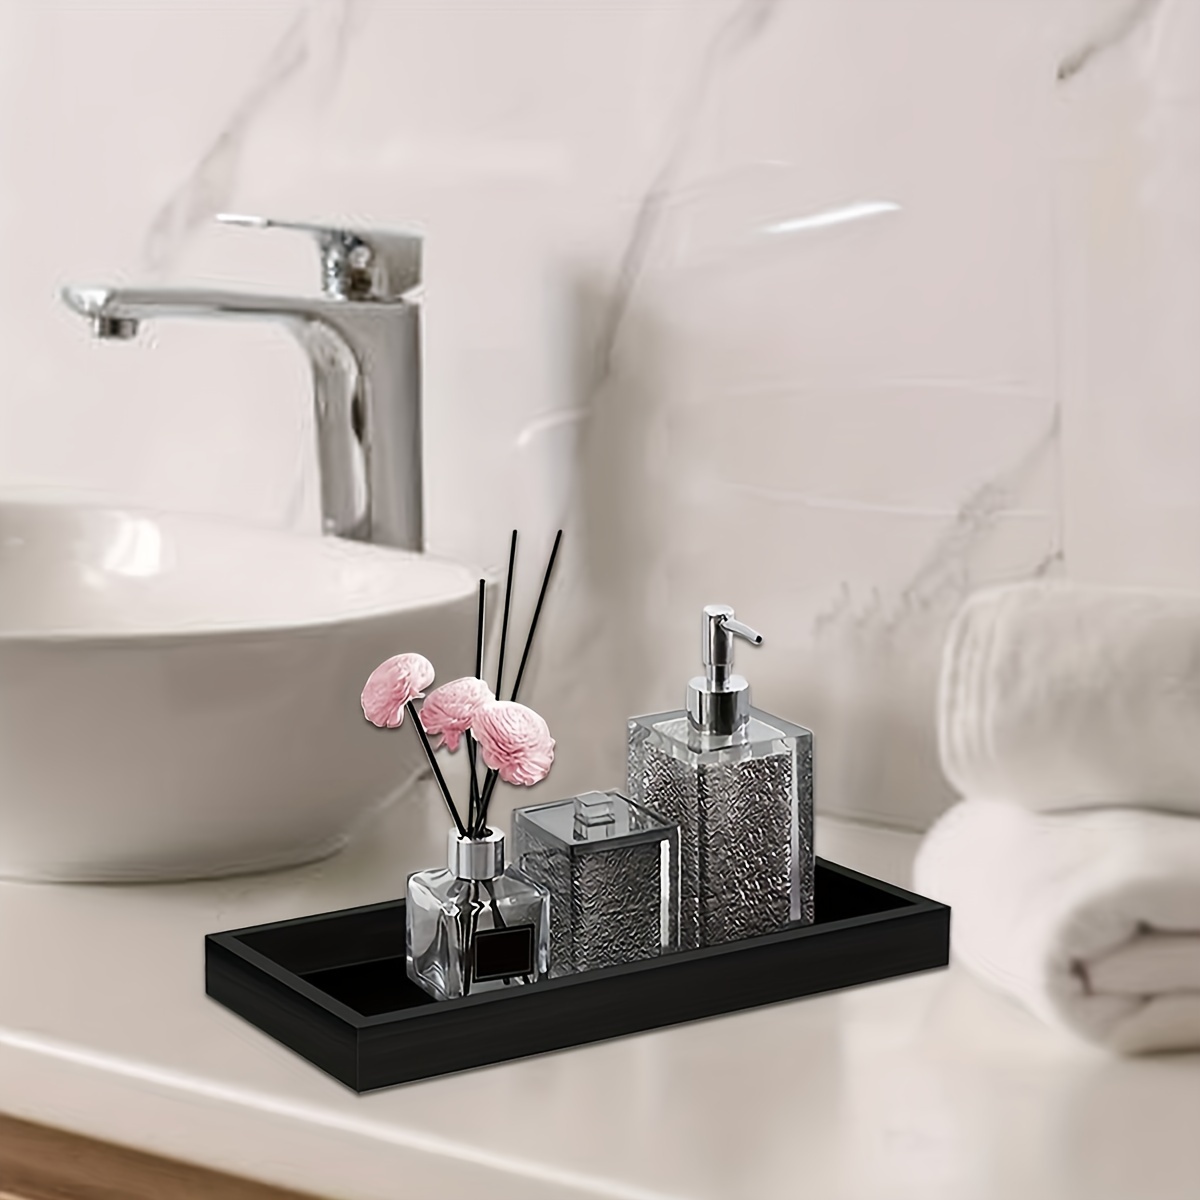 Silicone Sink Organizer - Silicone Tray for Kitchen and Bath